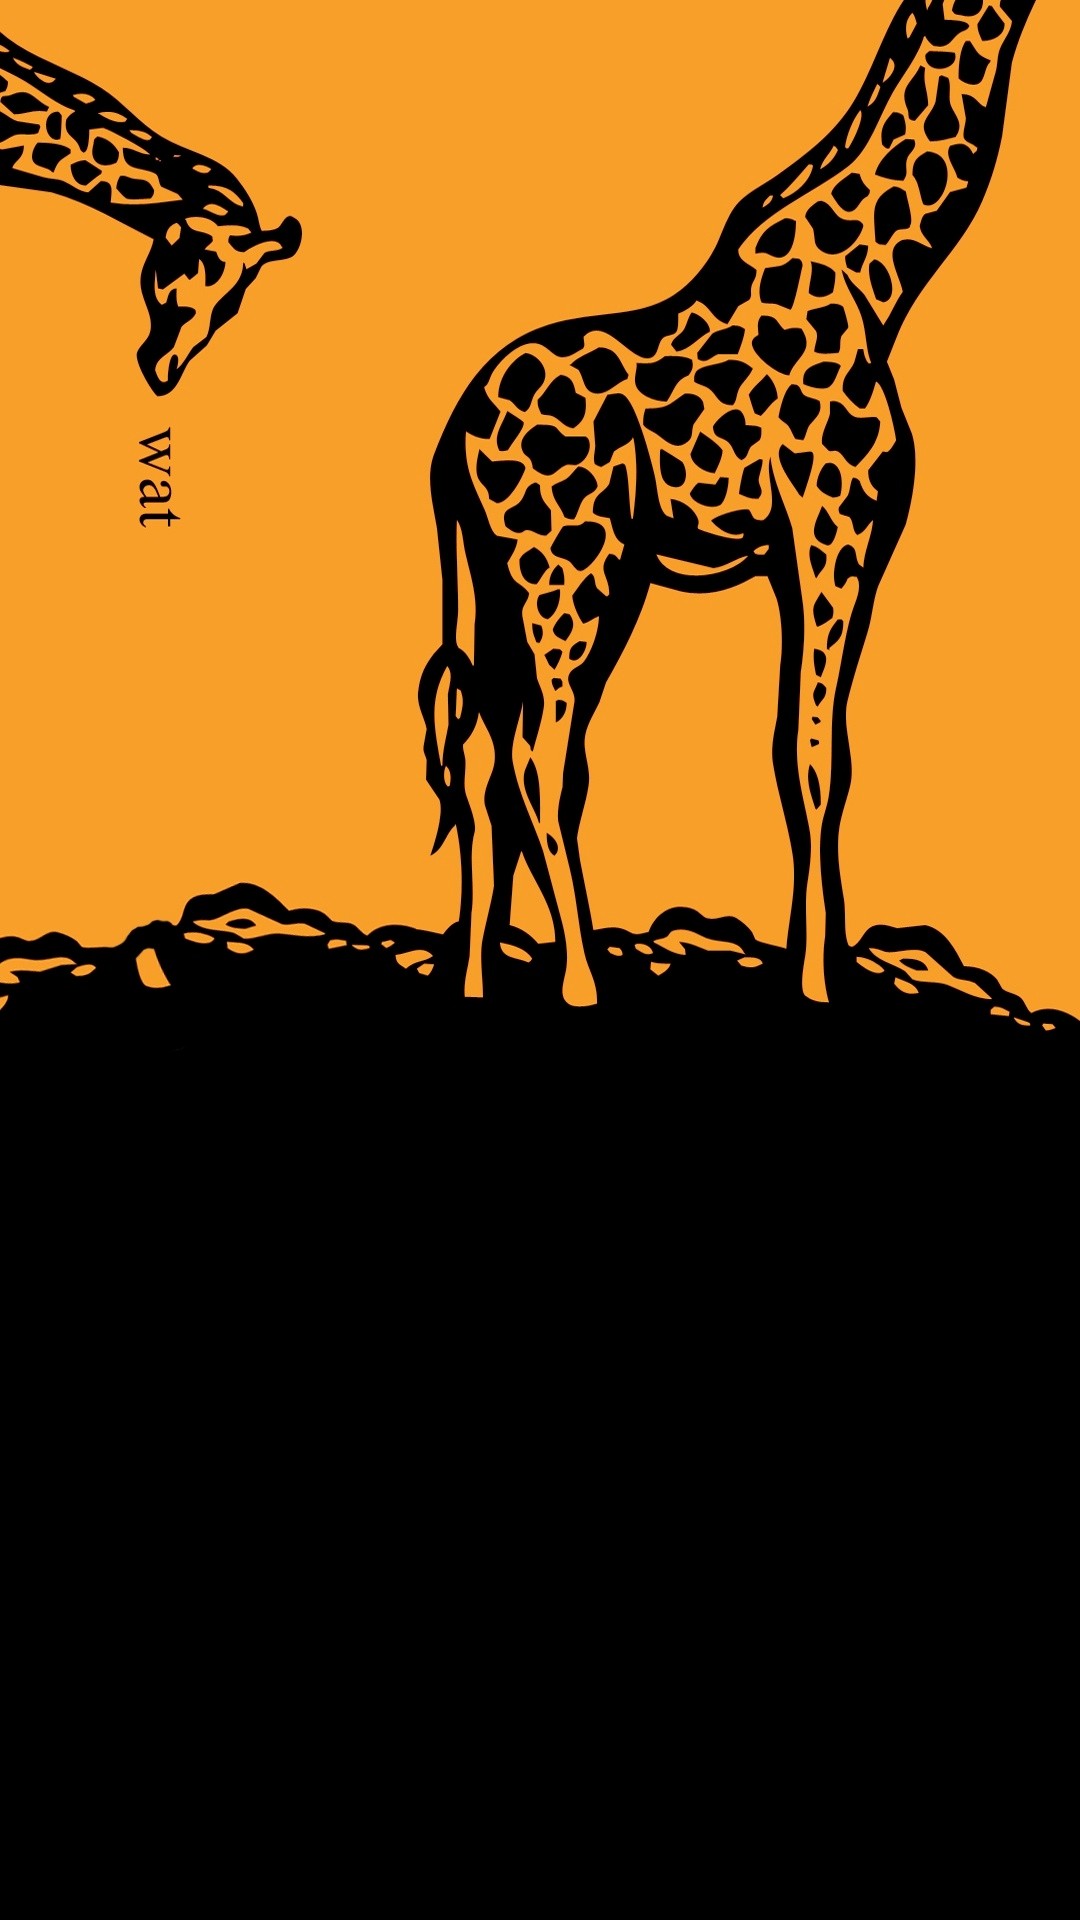 1080x1920 giraffe wat illustration iphone 6 hd wallpaper